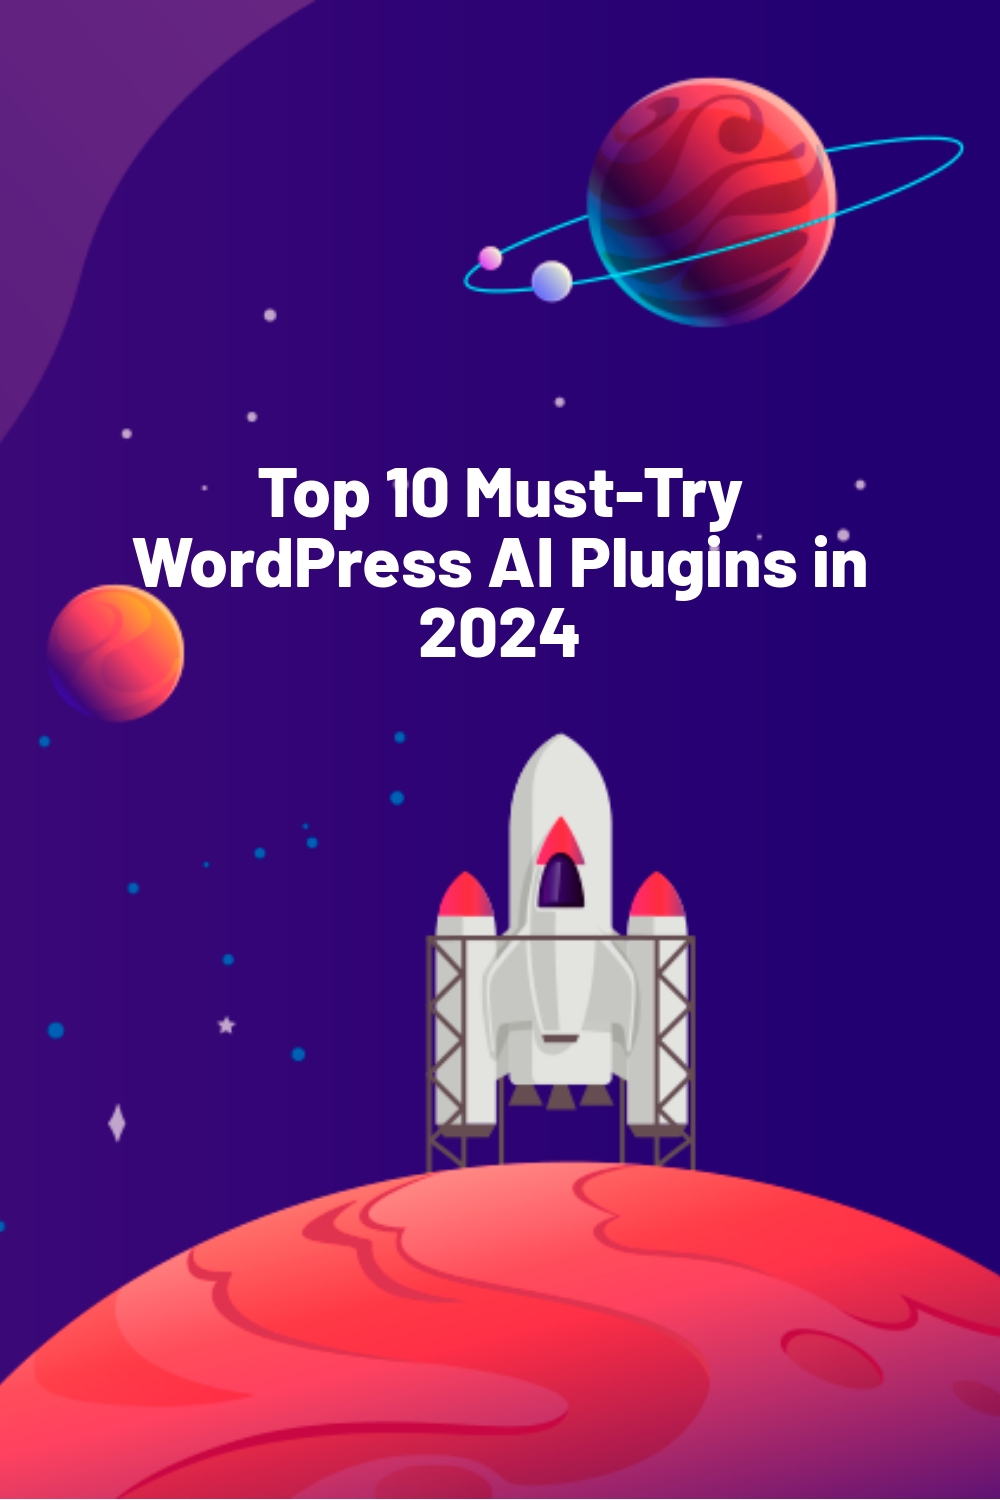 Top 10 Must-Try WordPress AI Plugins in 2024